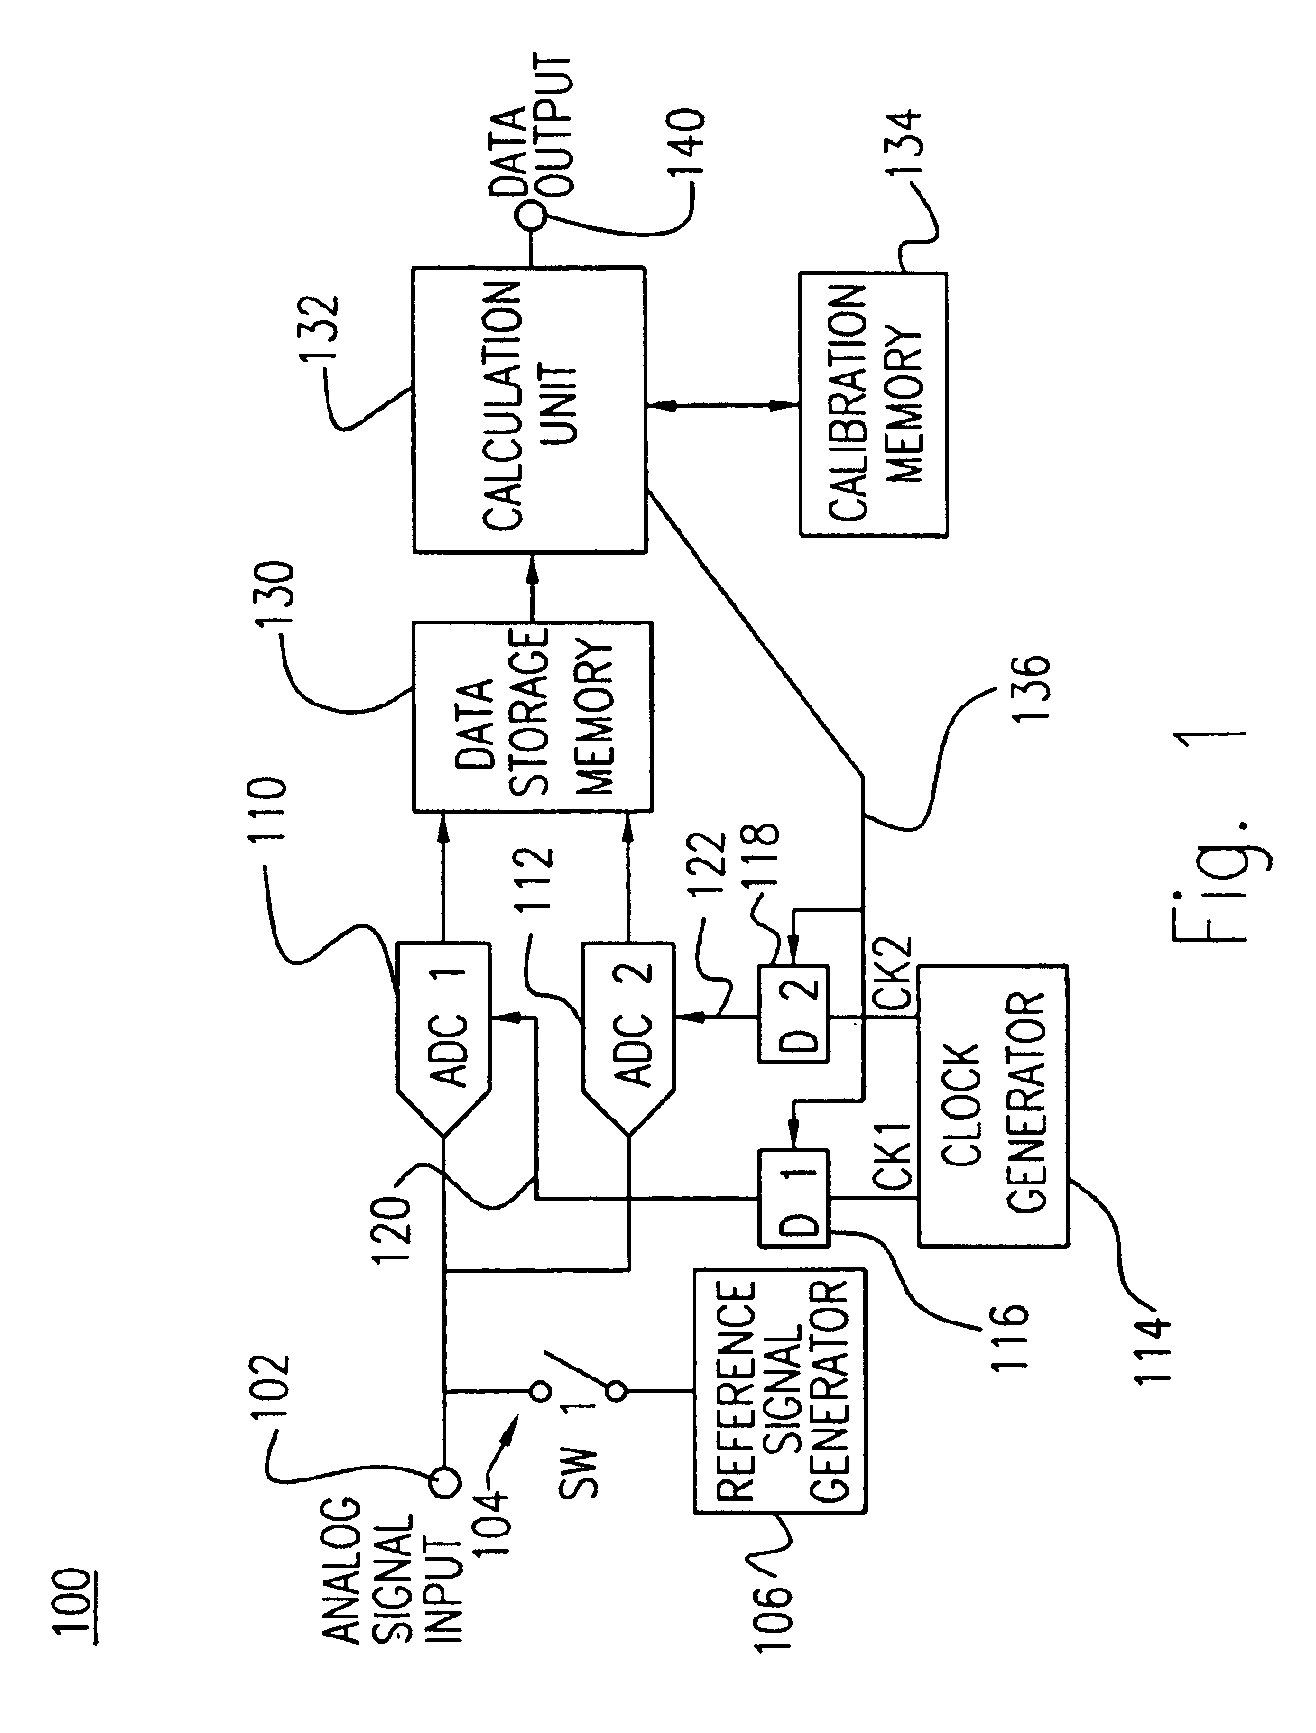 Calibration method for interleaving an A/D converter